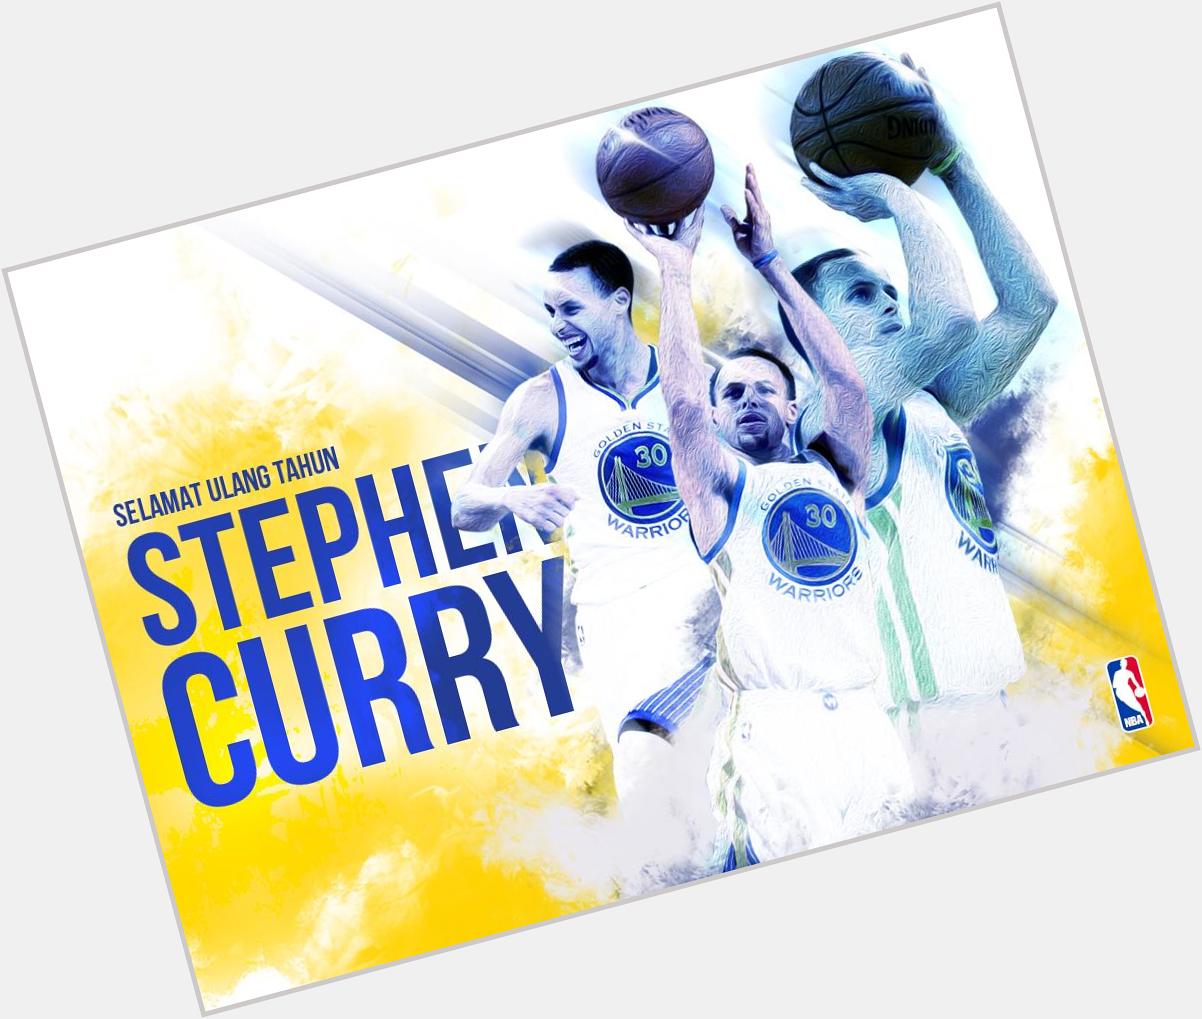 Happy birthday. Semoga shoot gua kaya elu om\" Selamat Ulang Tahun Stephen Curry! 